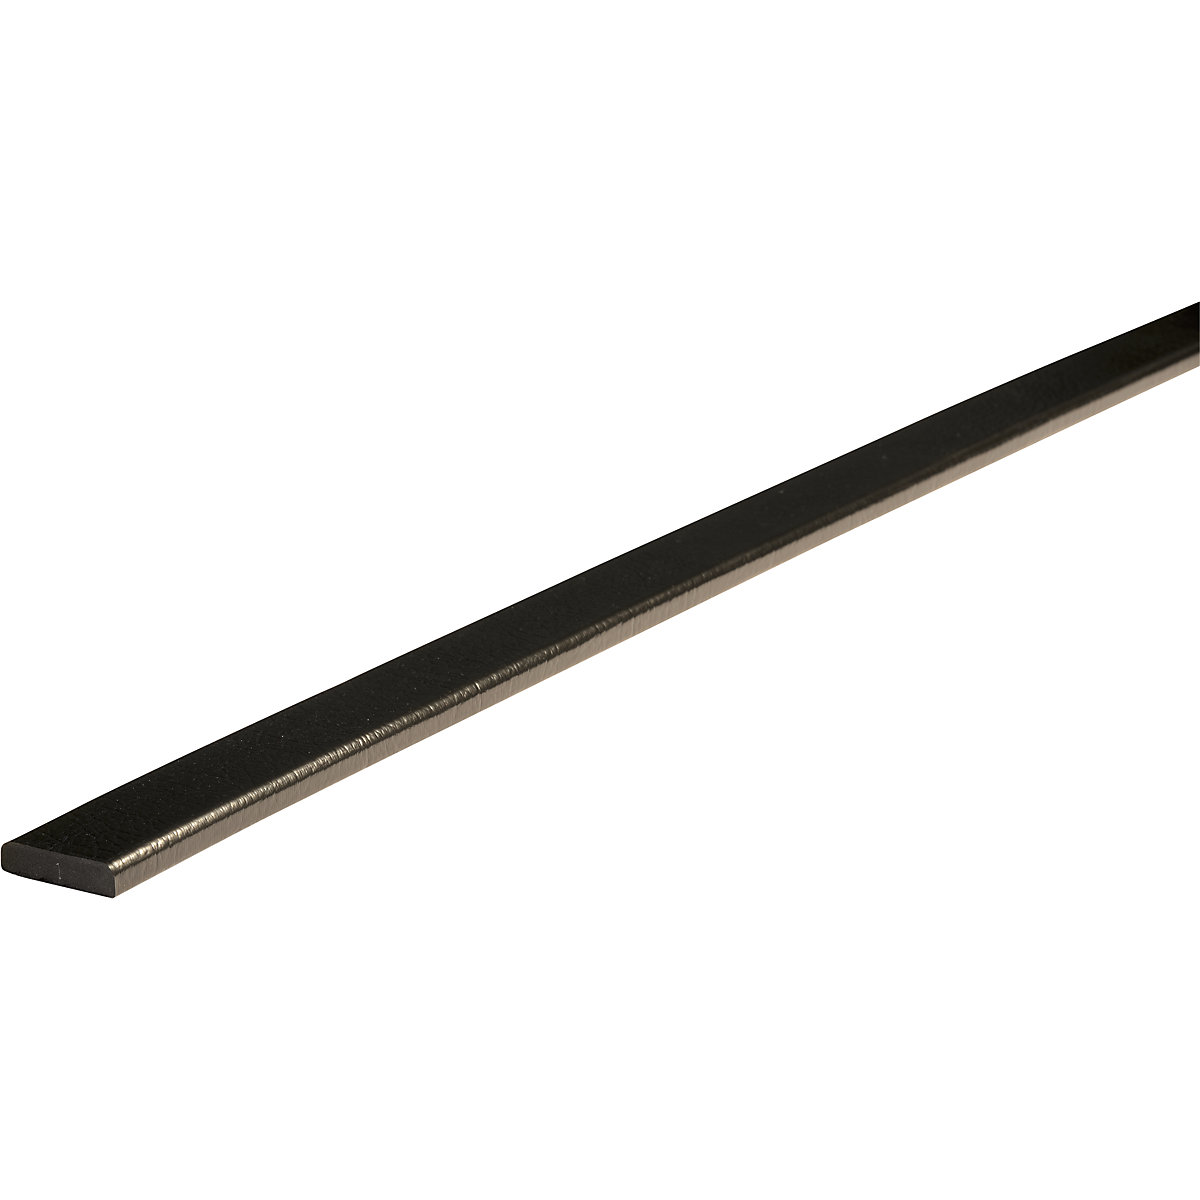 Knuffi®-oppervlaktebescherming – SHG, type F FROST, stuk van 1 m, zwart-19